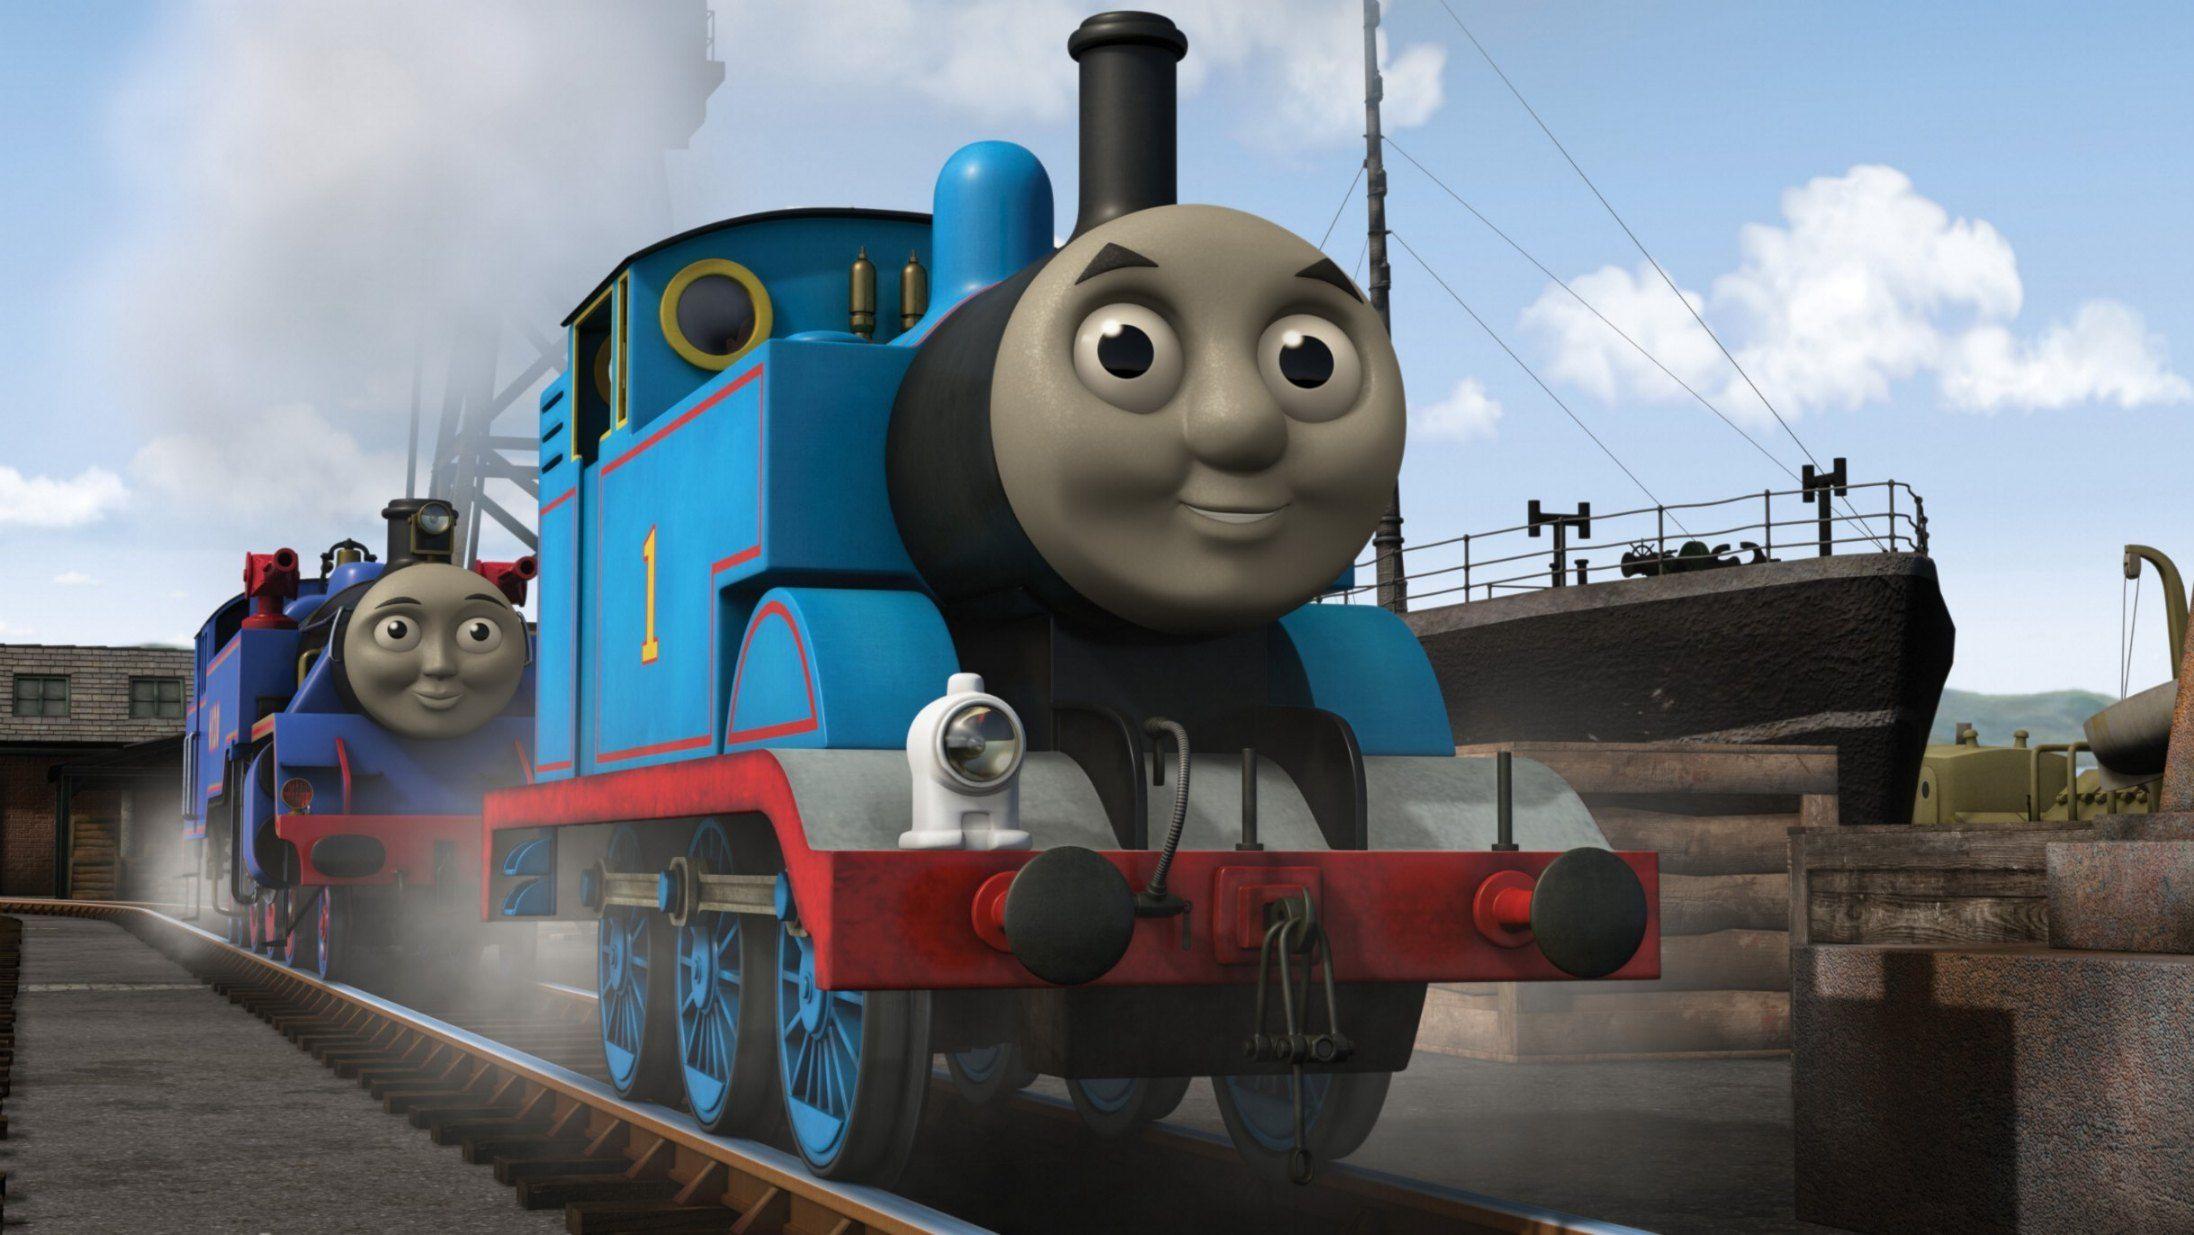 Thomas the Tank Engine returns to Vue